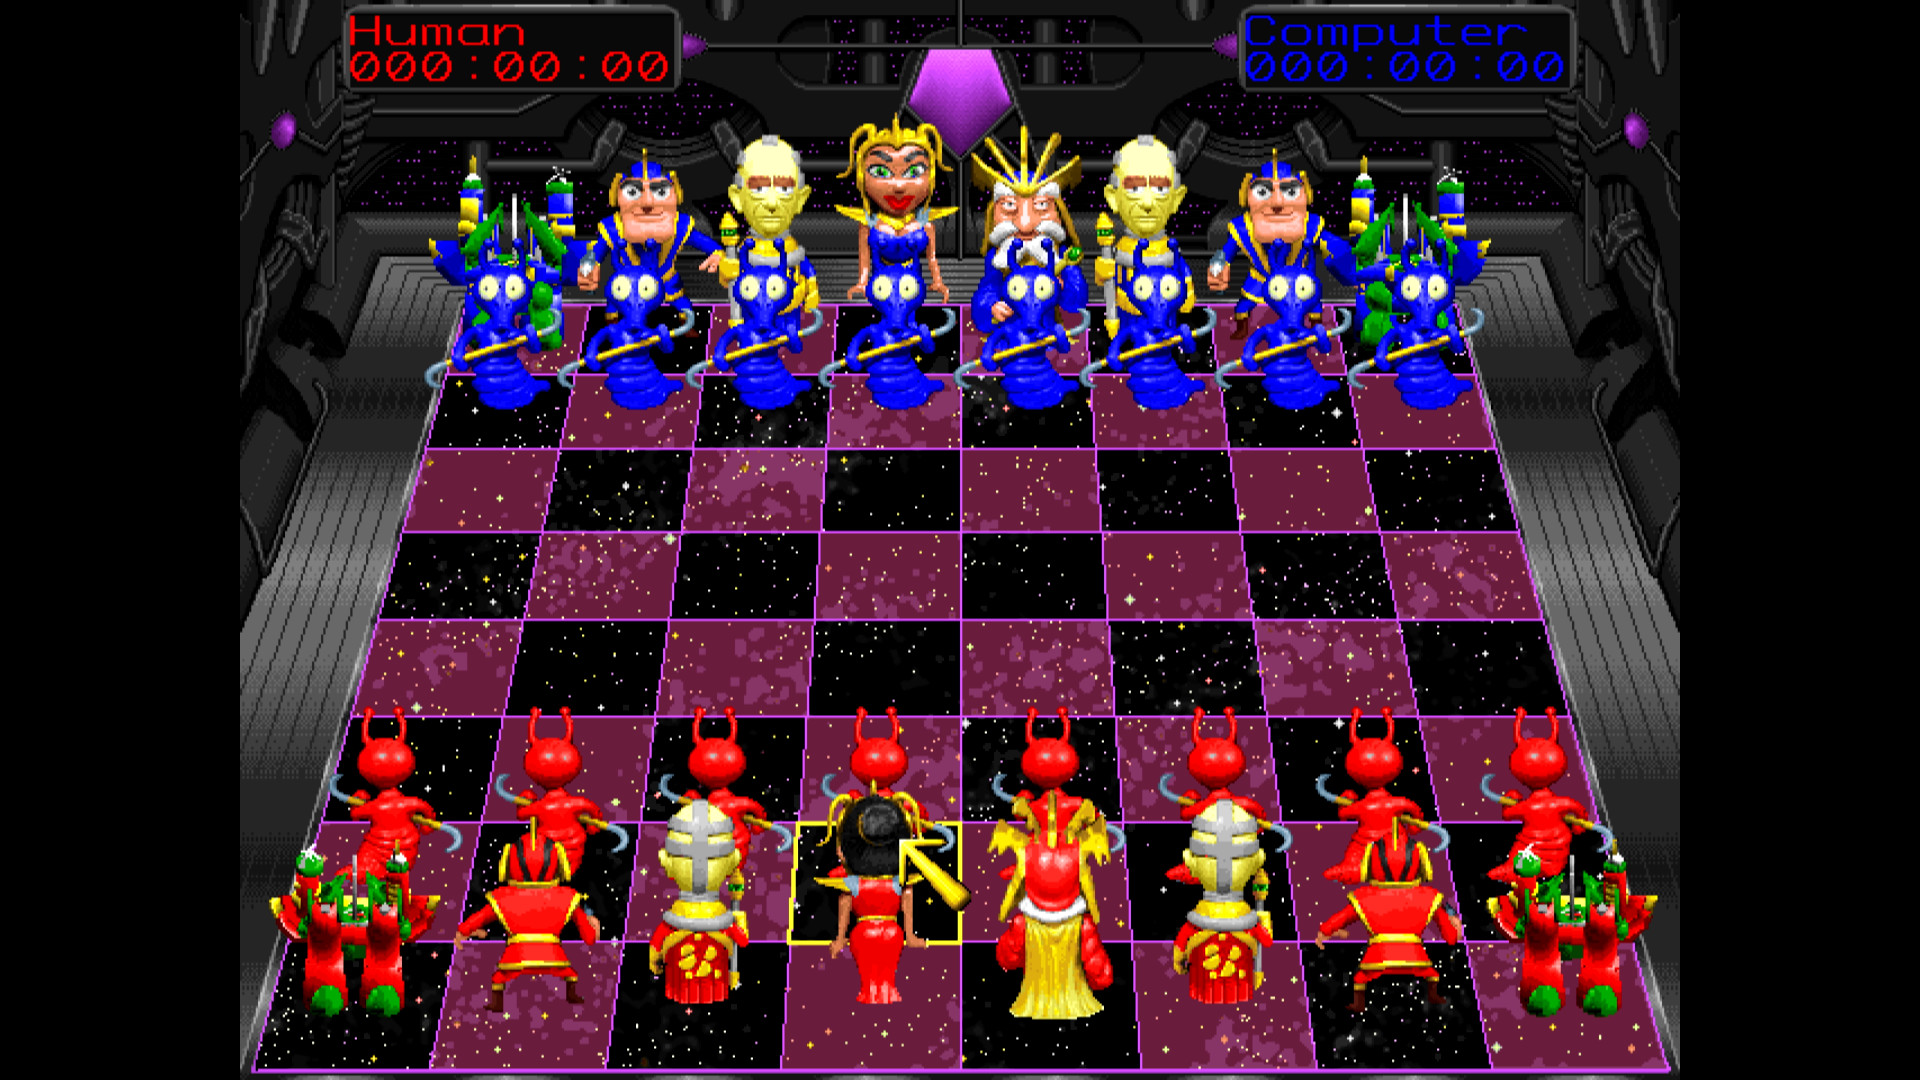 battle chess dos